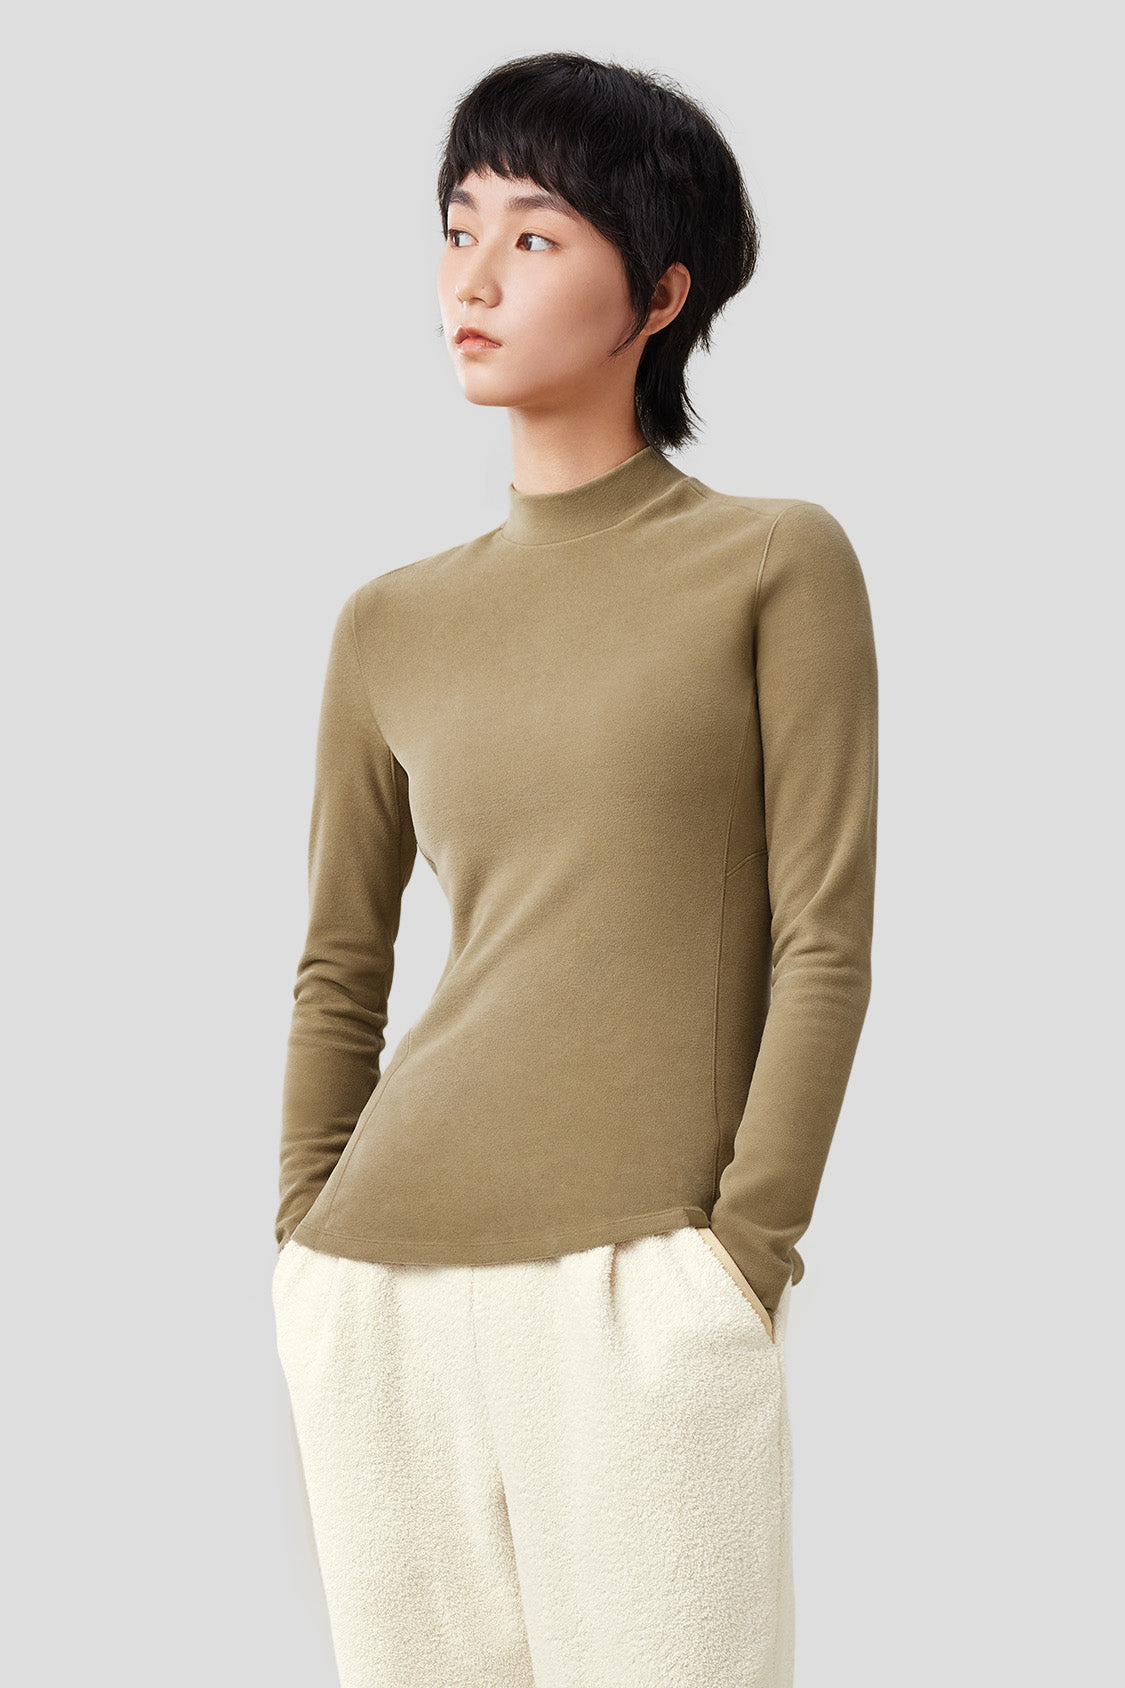 beneunder women's mid-warm half turtle-neck fleece long-sleeve shirt #color_truffle brown